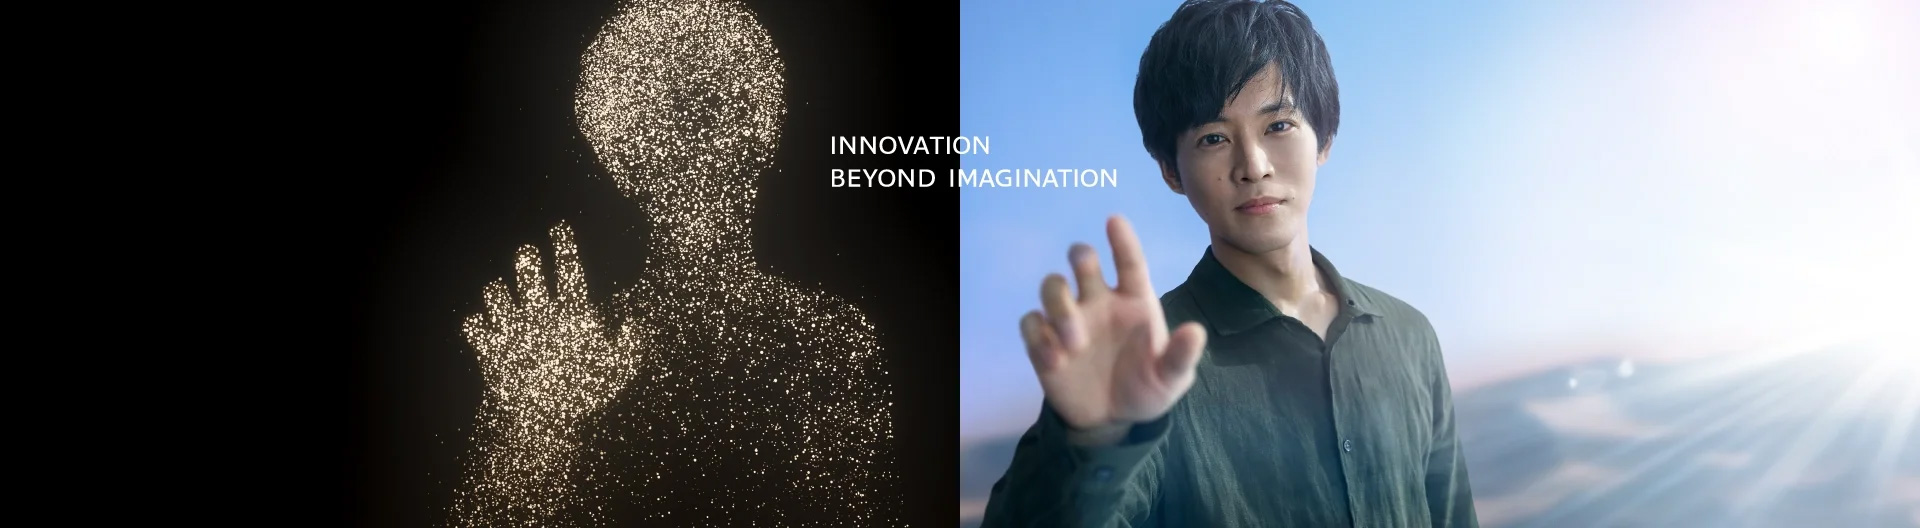 Innovation Beyond Imagination